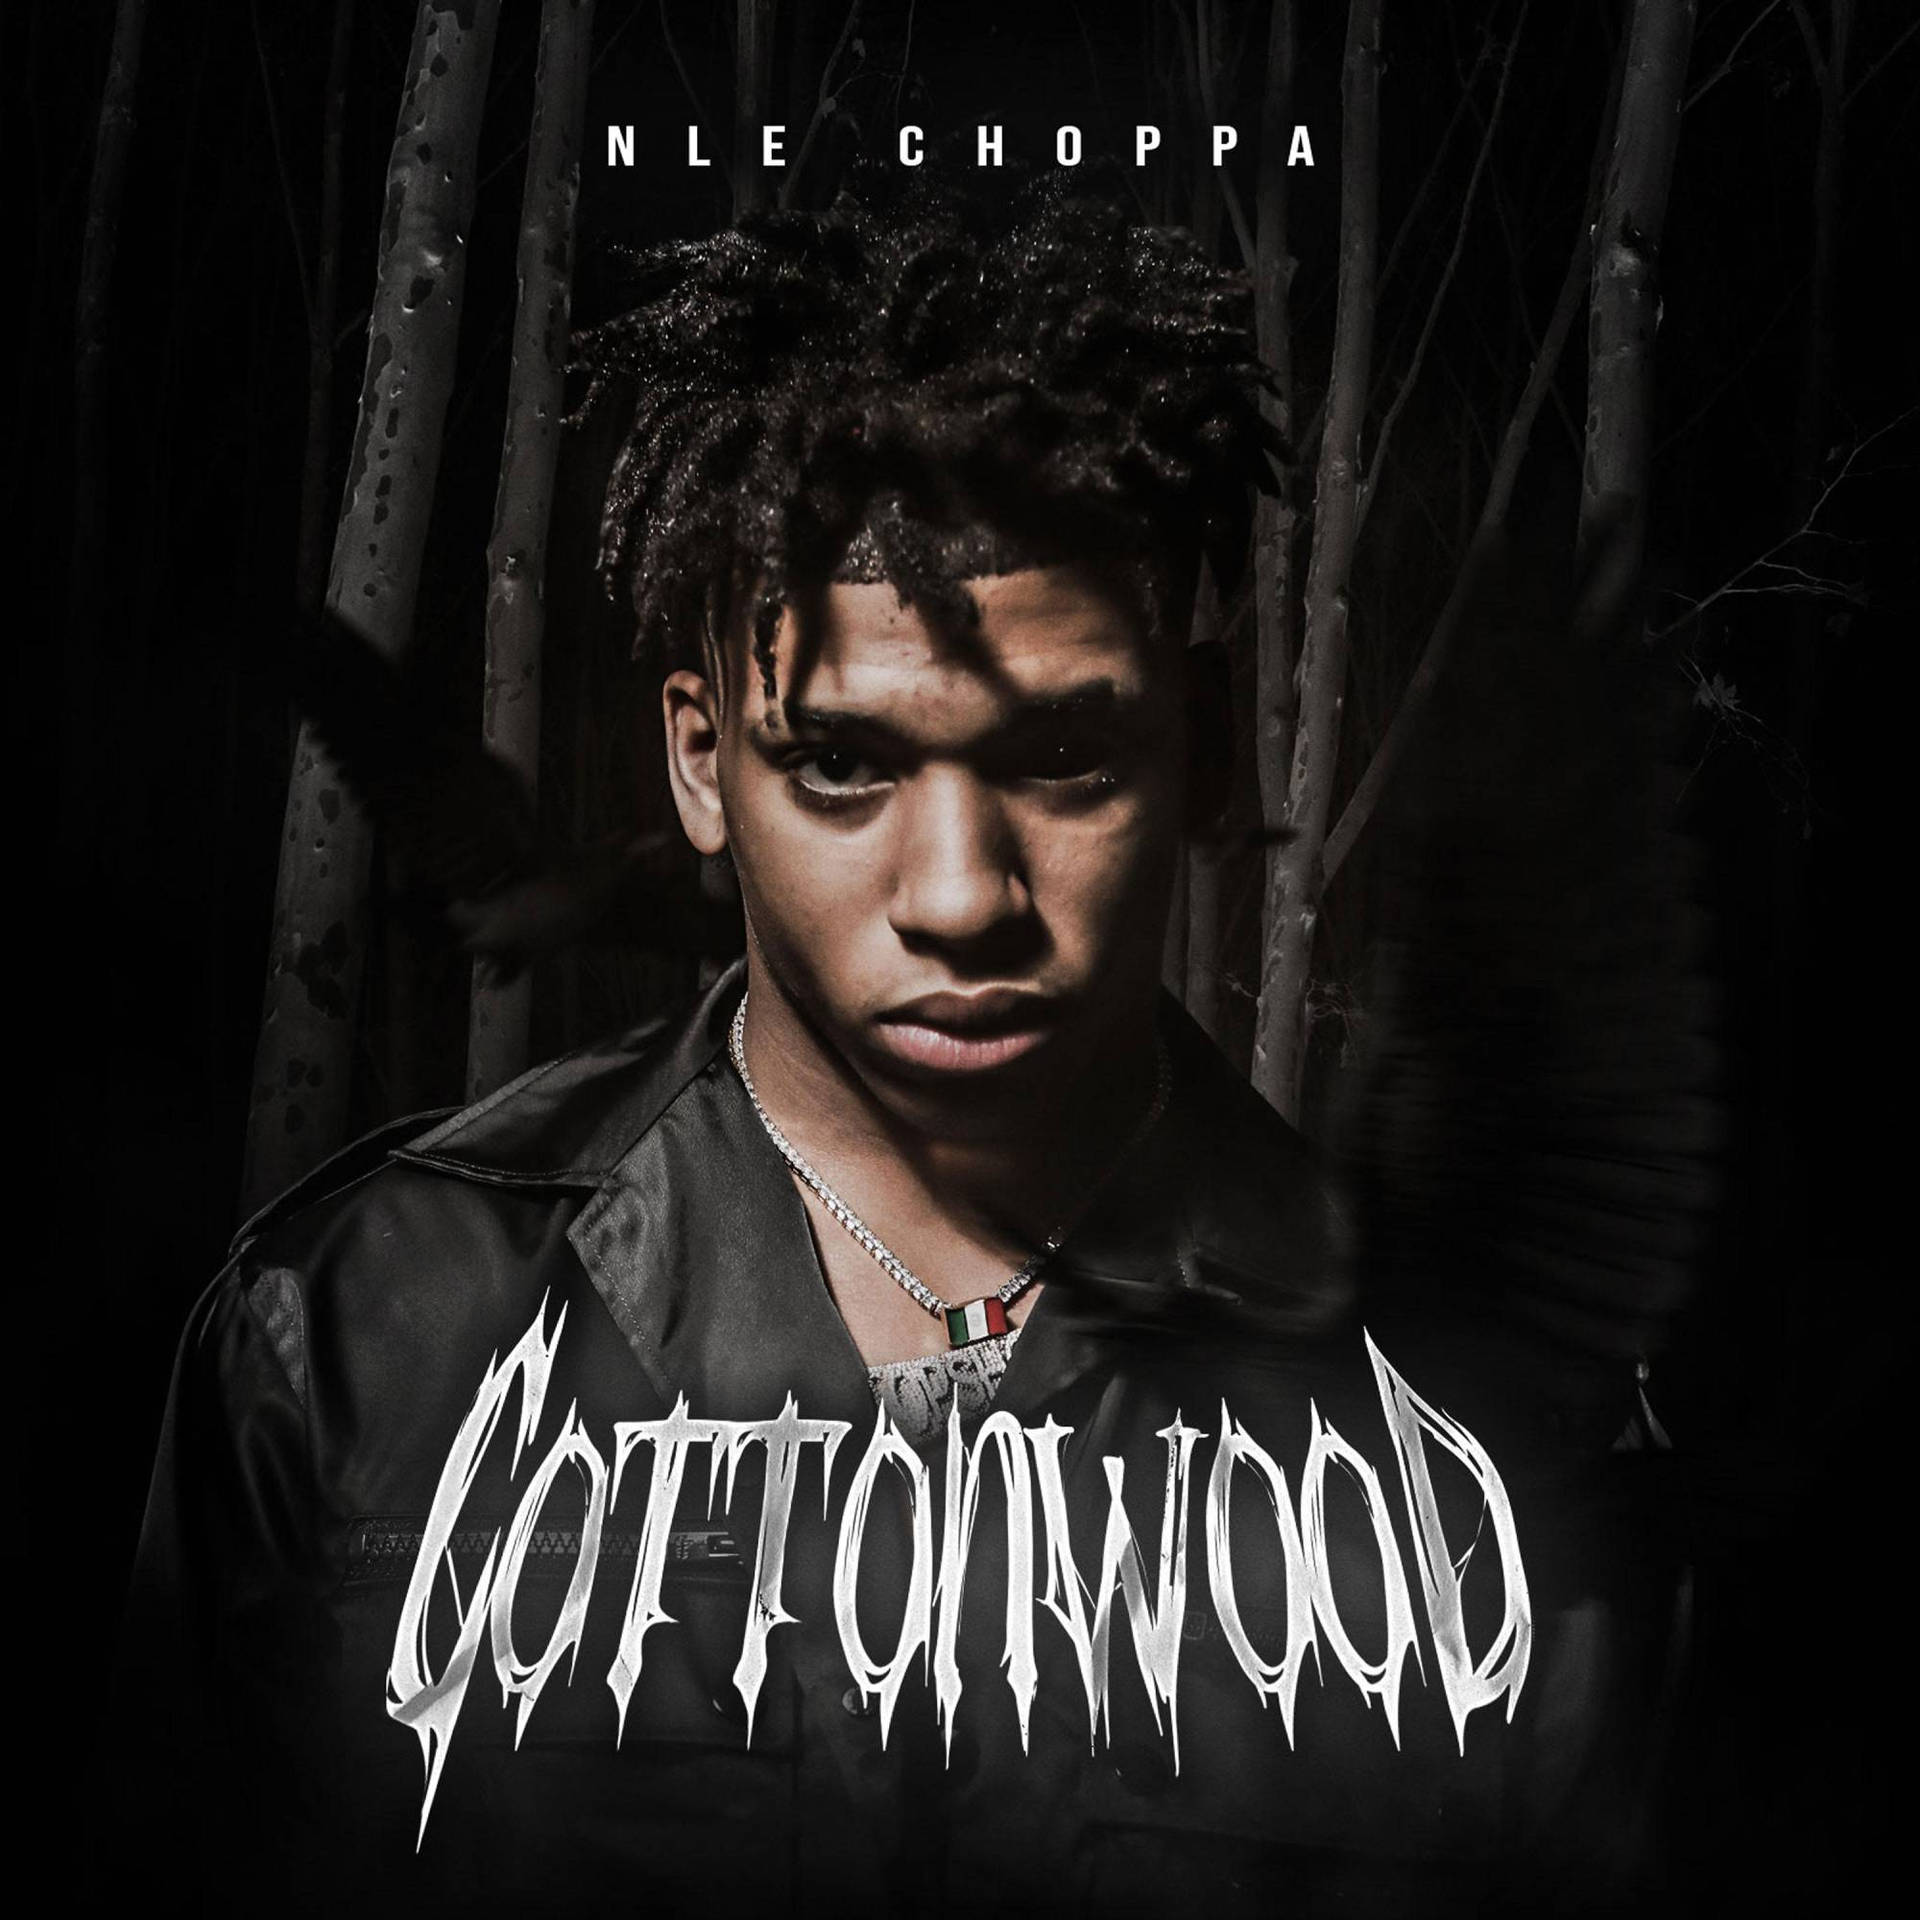 Nle Choppa Cottonwood